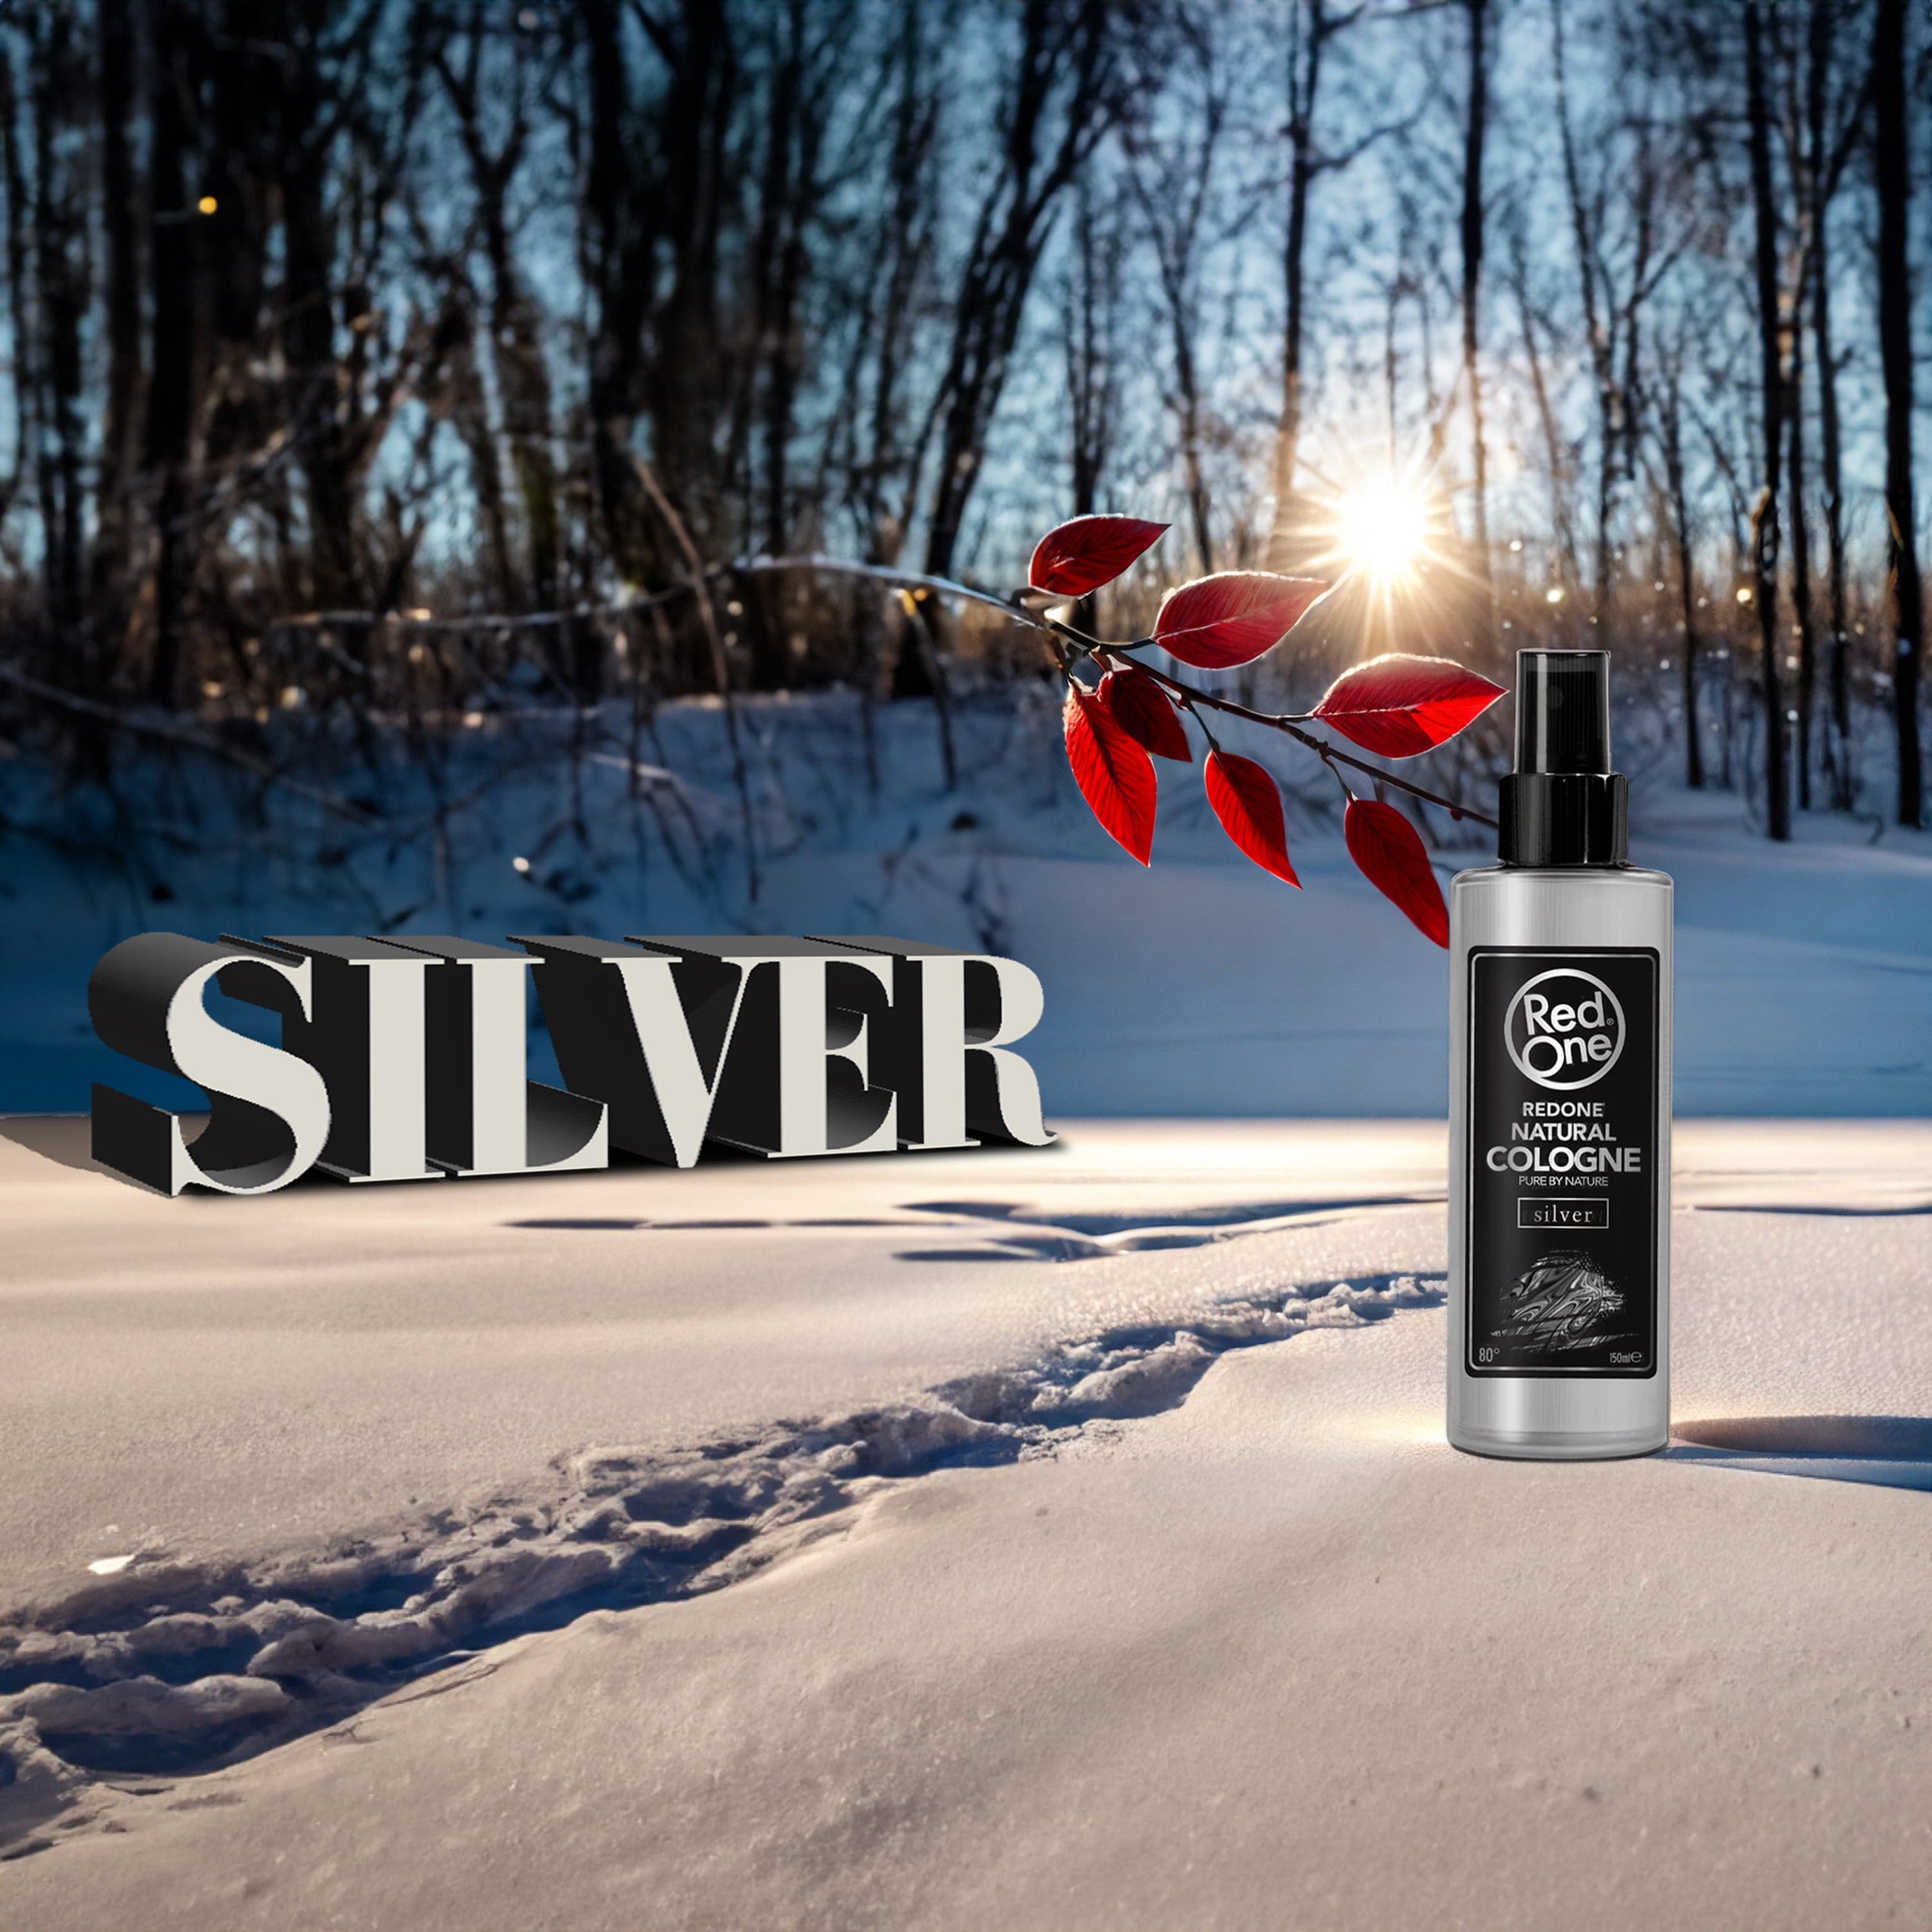 Redone - Natural Cologne Spray Silver 150ml